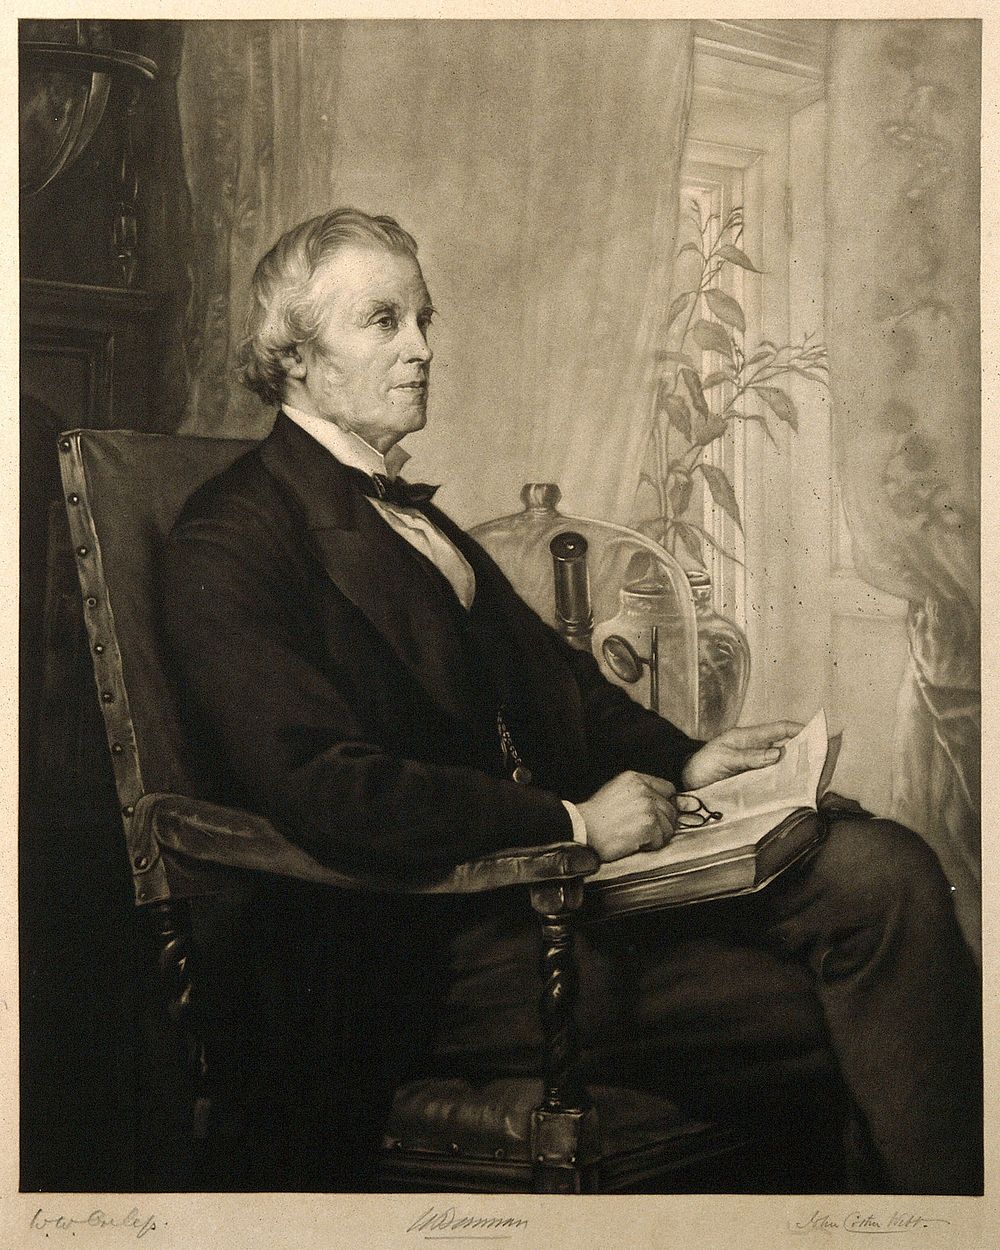 Sir William Bowman. Mezzotint by J.C. Webb after W.W. Ouless, 1889.